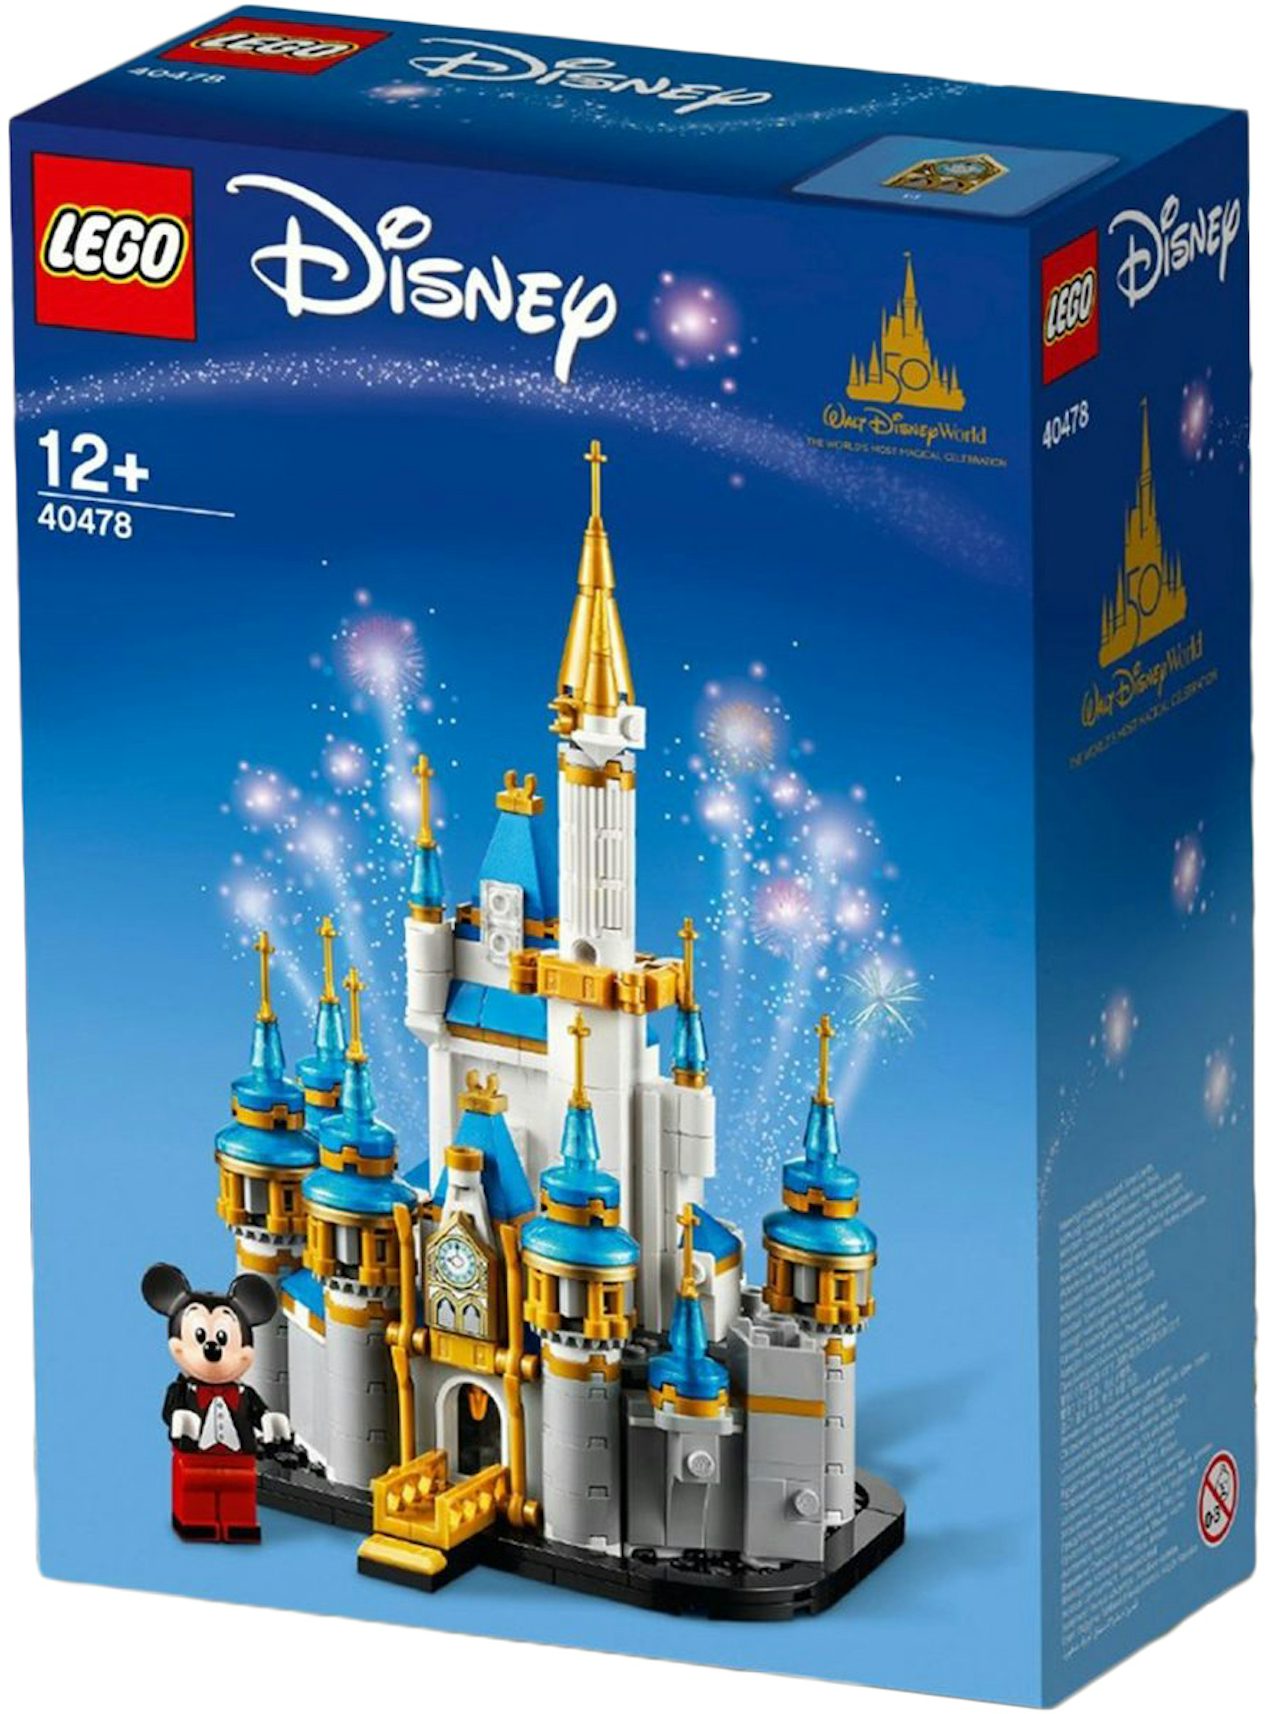 https://images.stockx.com/images/LEGO-Disney-Mini-Castle-Set-40478.jpg?fit=fill&bg=FFFFFF&w=1200&h=857&fm=jpg&auto=compress&dpr=2&trim=color&updated_at=1646412778&q=60